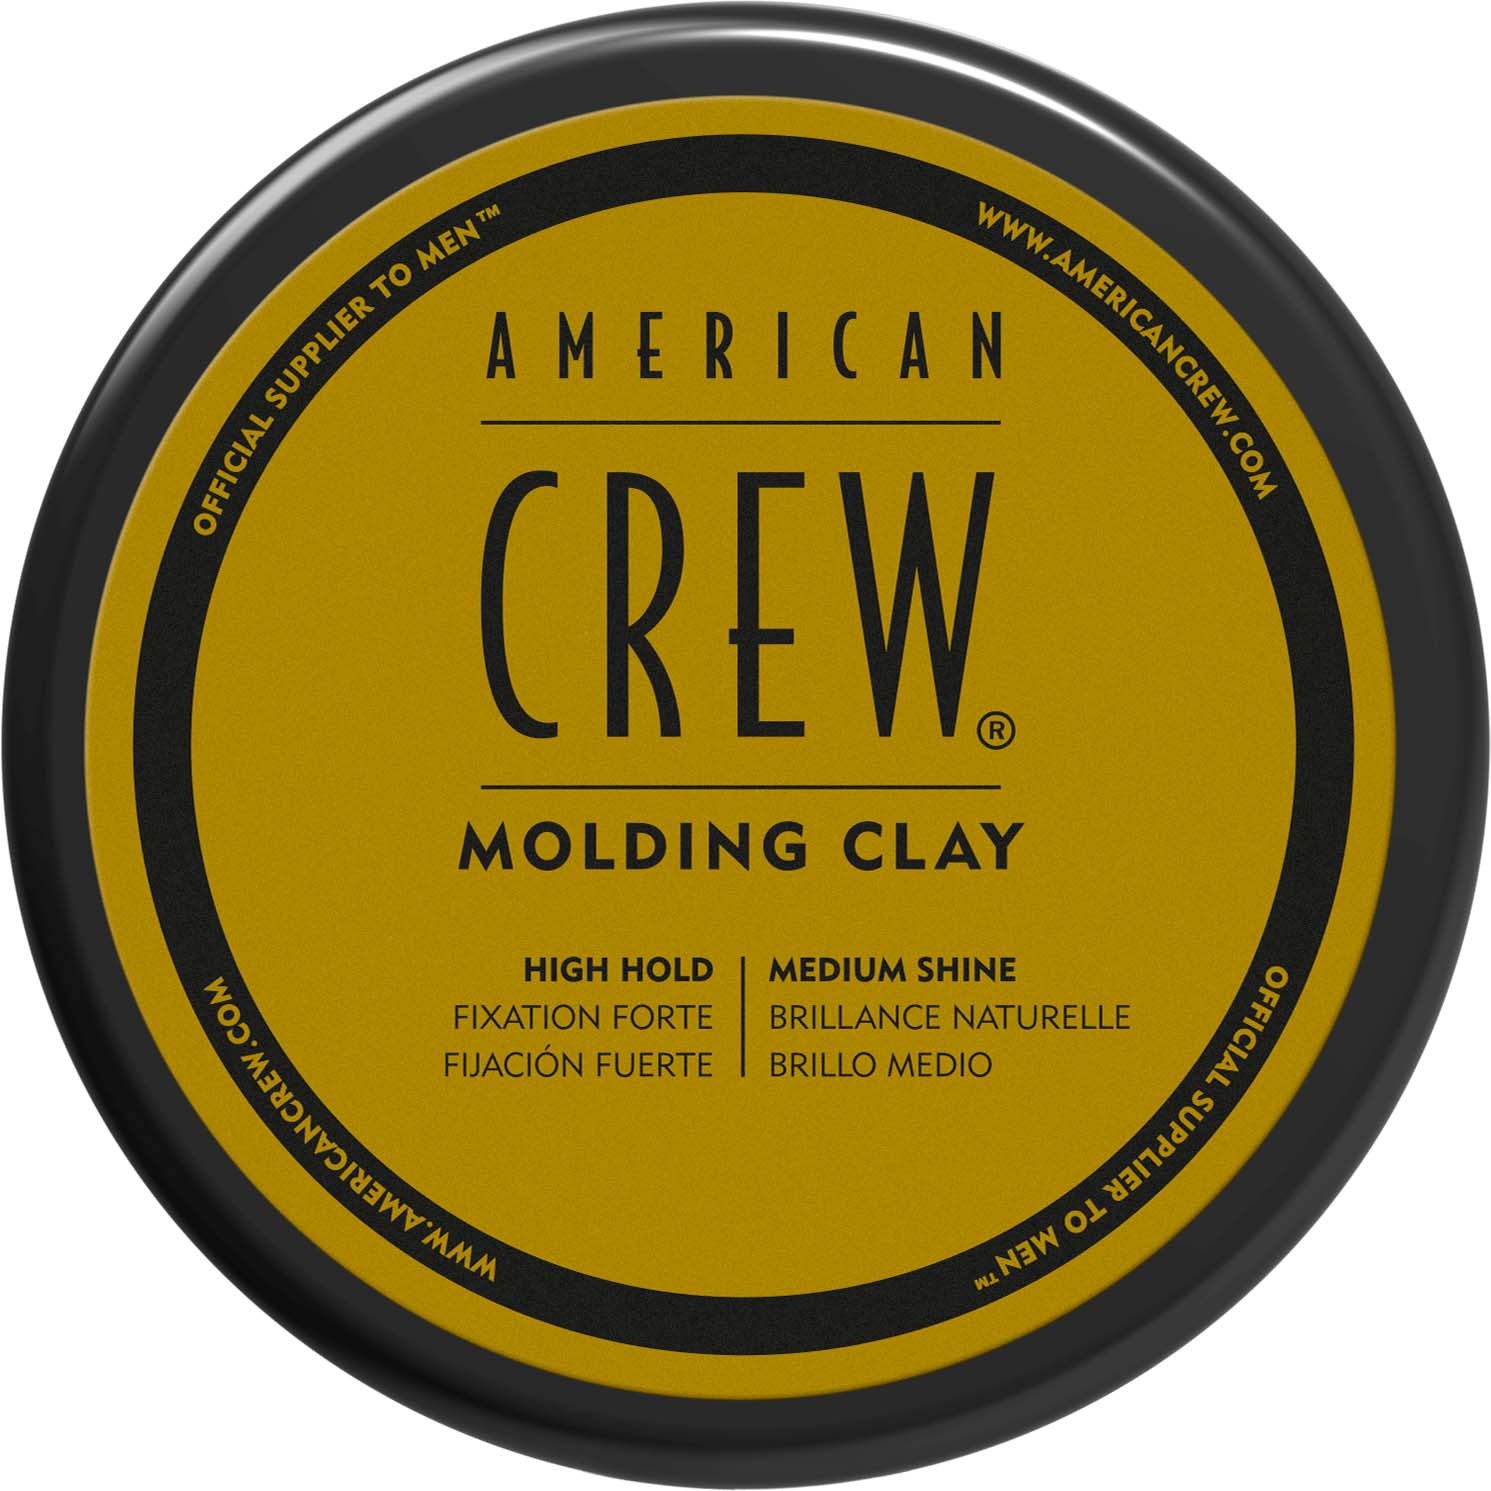 Bilde av American Crew King Moldning Clay 85g 85 G